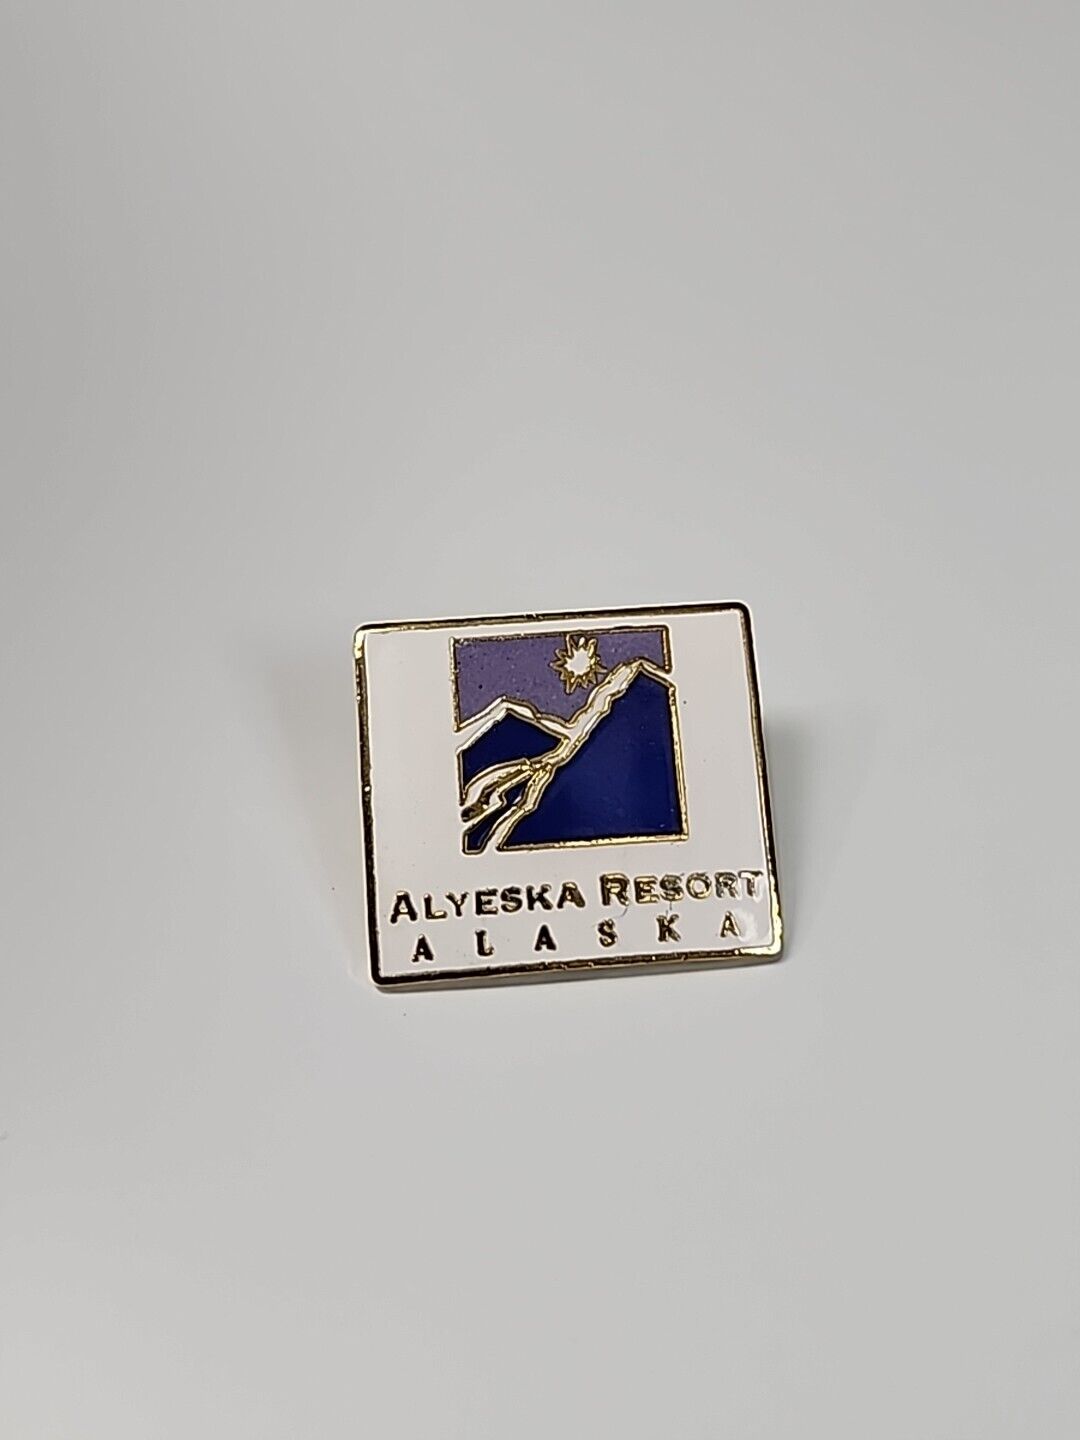 Alyeska Resort Travel Souvenir Lapel Pin Girdwood Alaska